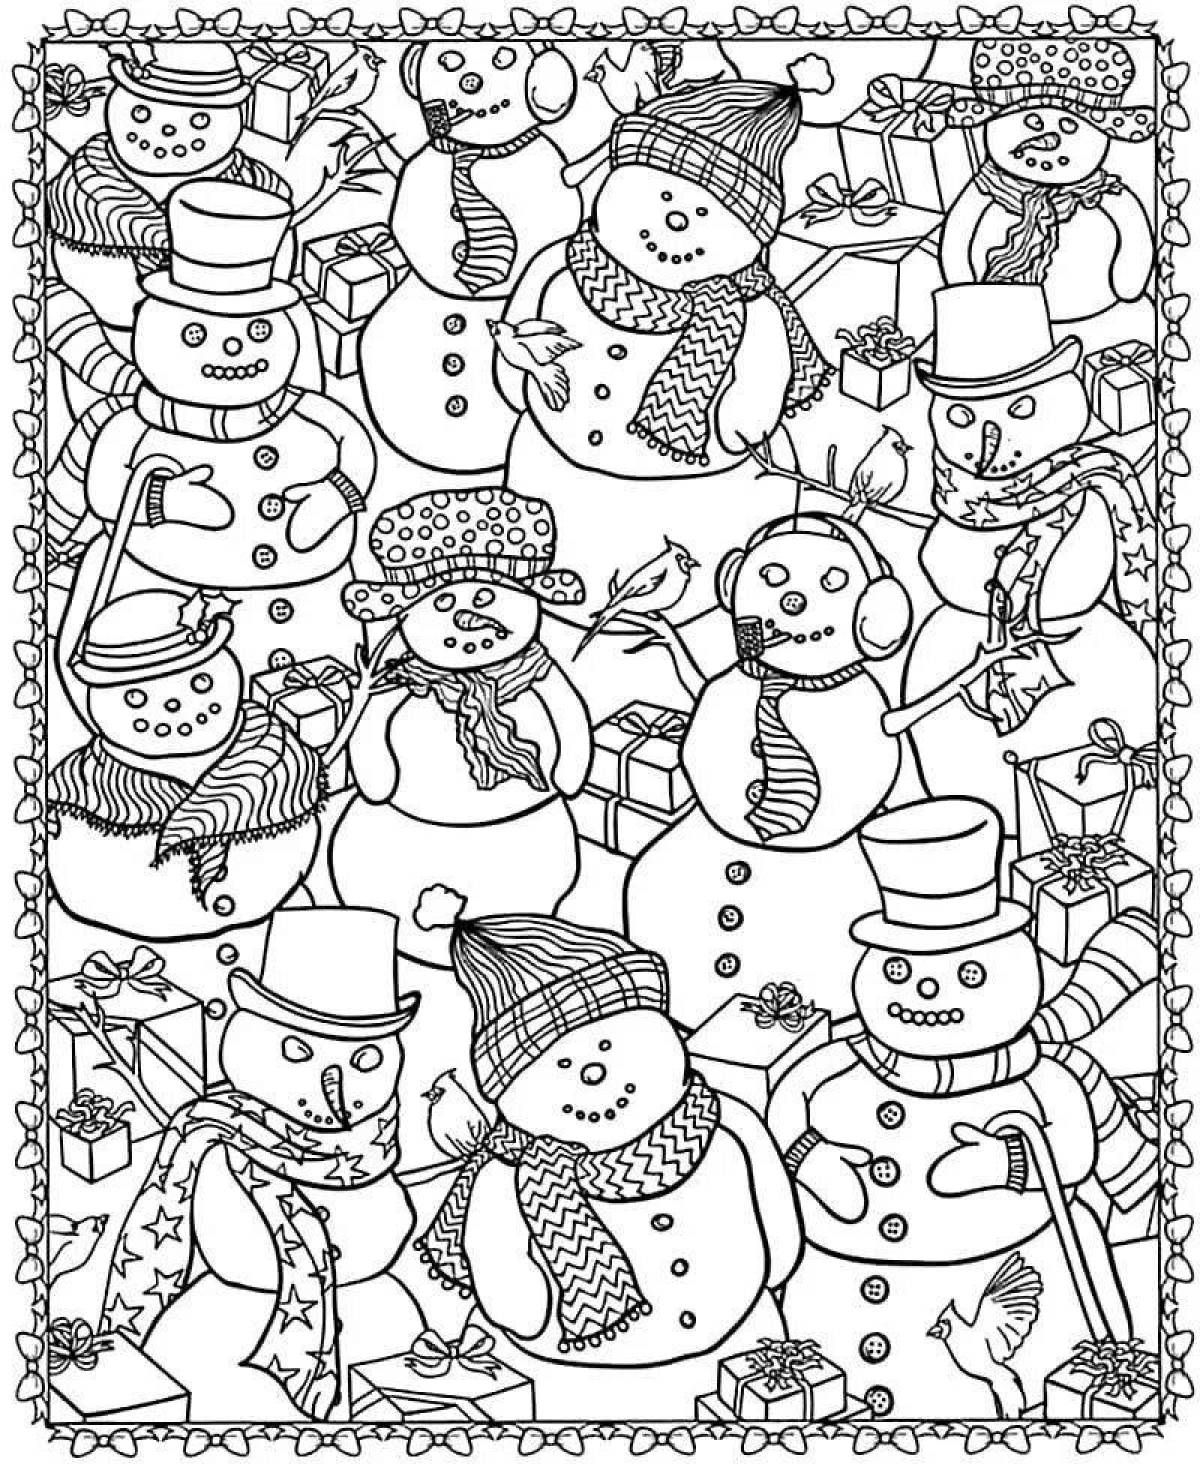 Coloring book charming snowman antistress